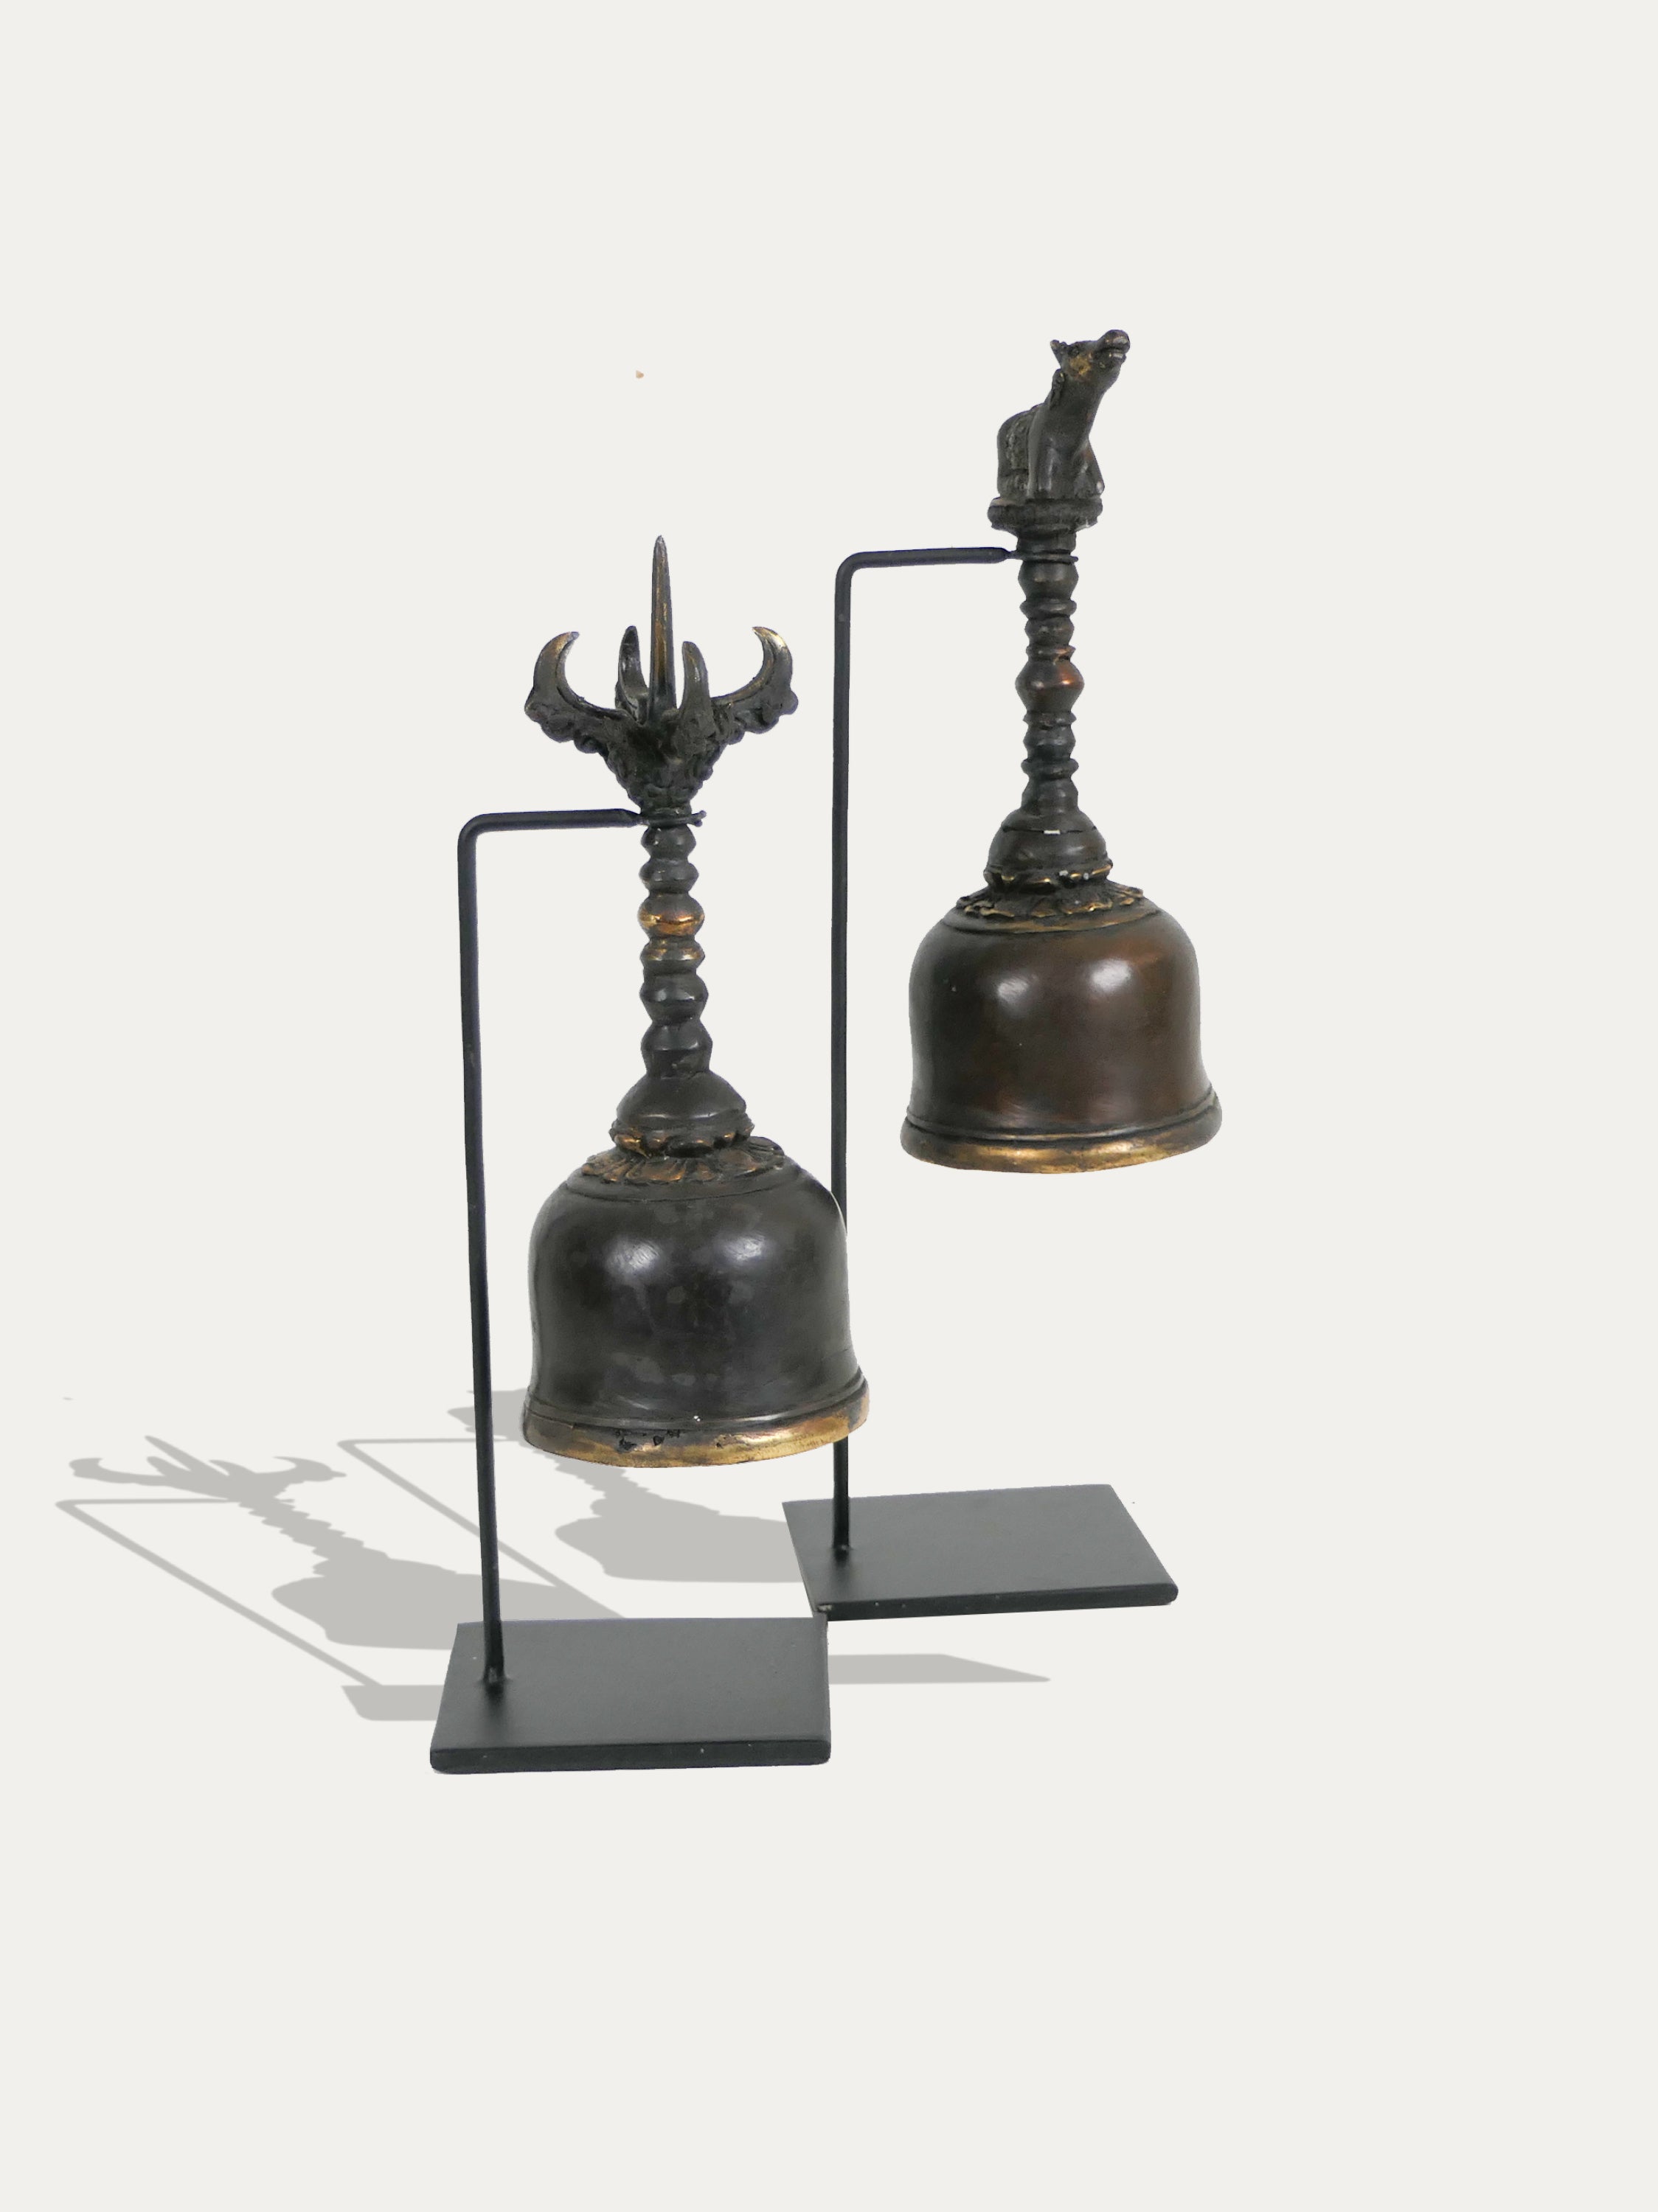 Set of 2 large Ghanta - Ceremonial Bells from Bali - Asian Art from Kirschon